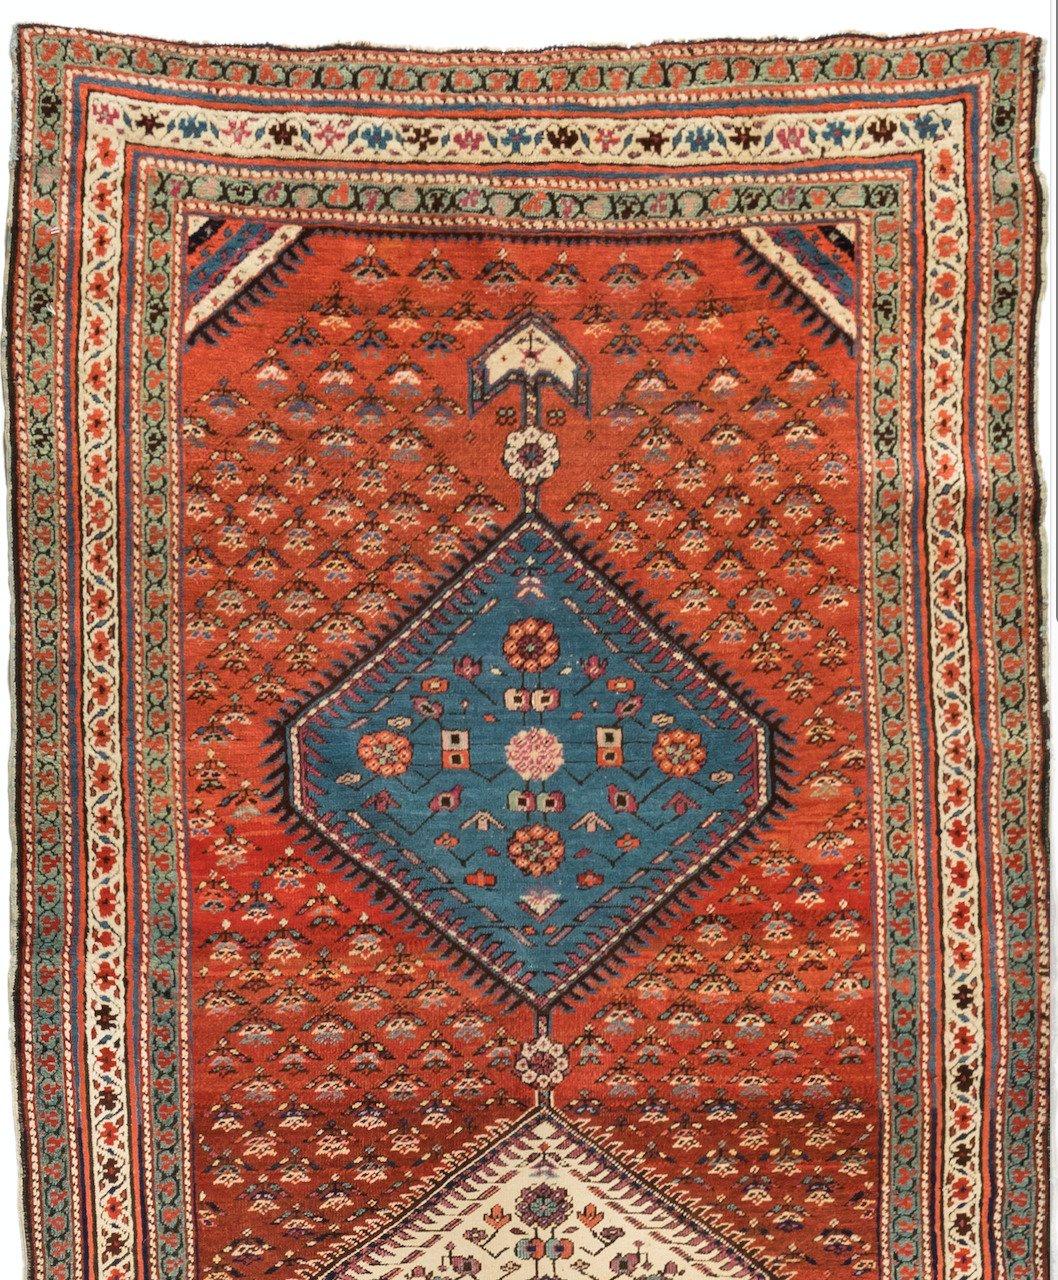 Tribal Antique Caucasian Geometric Rust and Blue Karabagh Runner Rug circa 1900-1910s For Sale